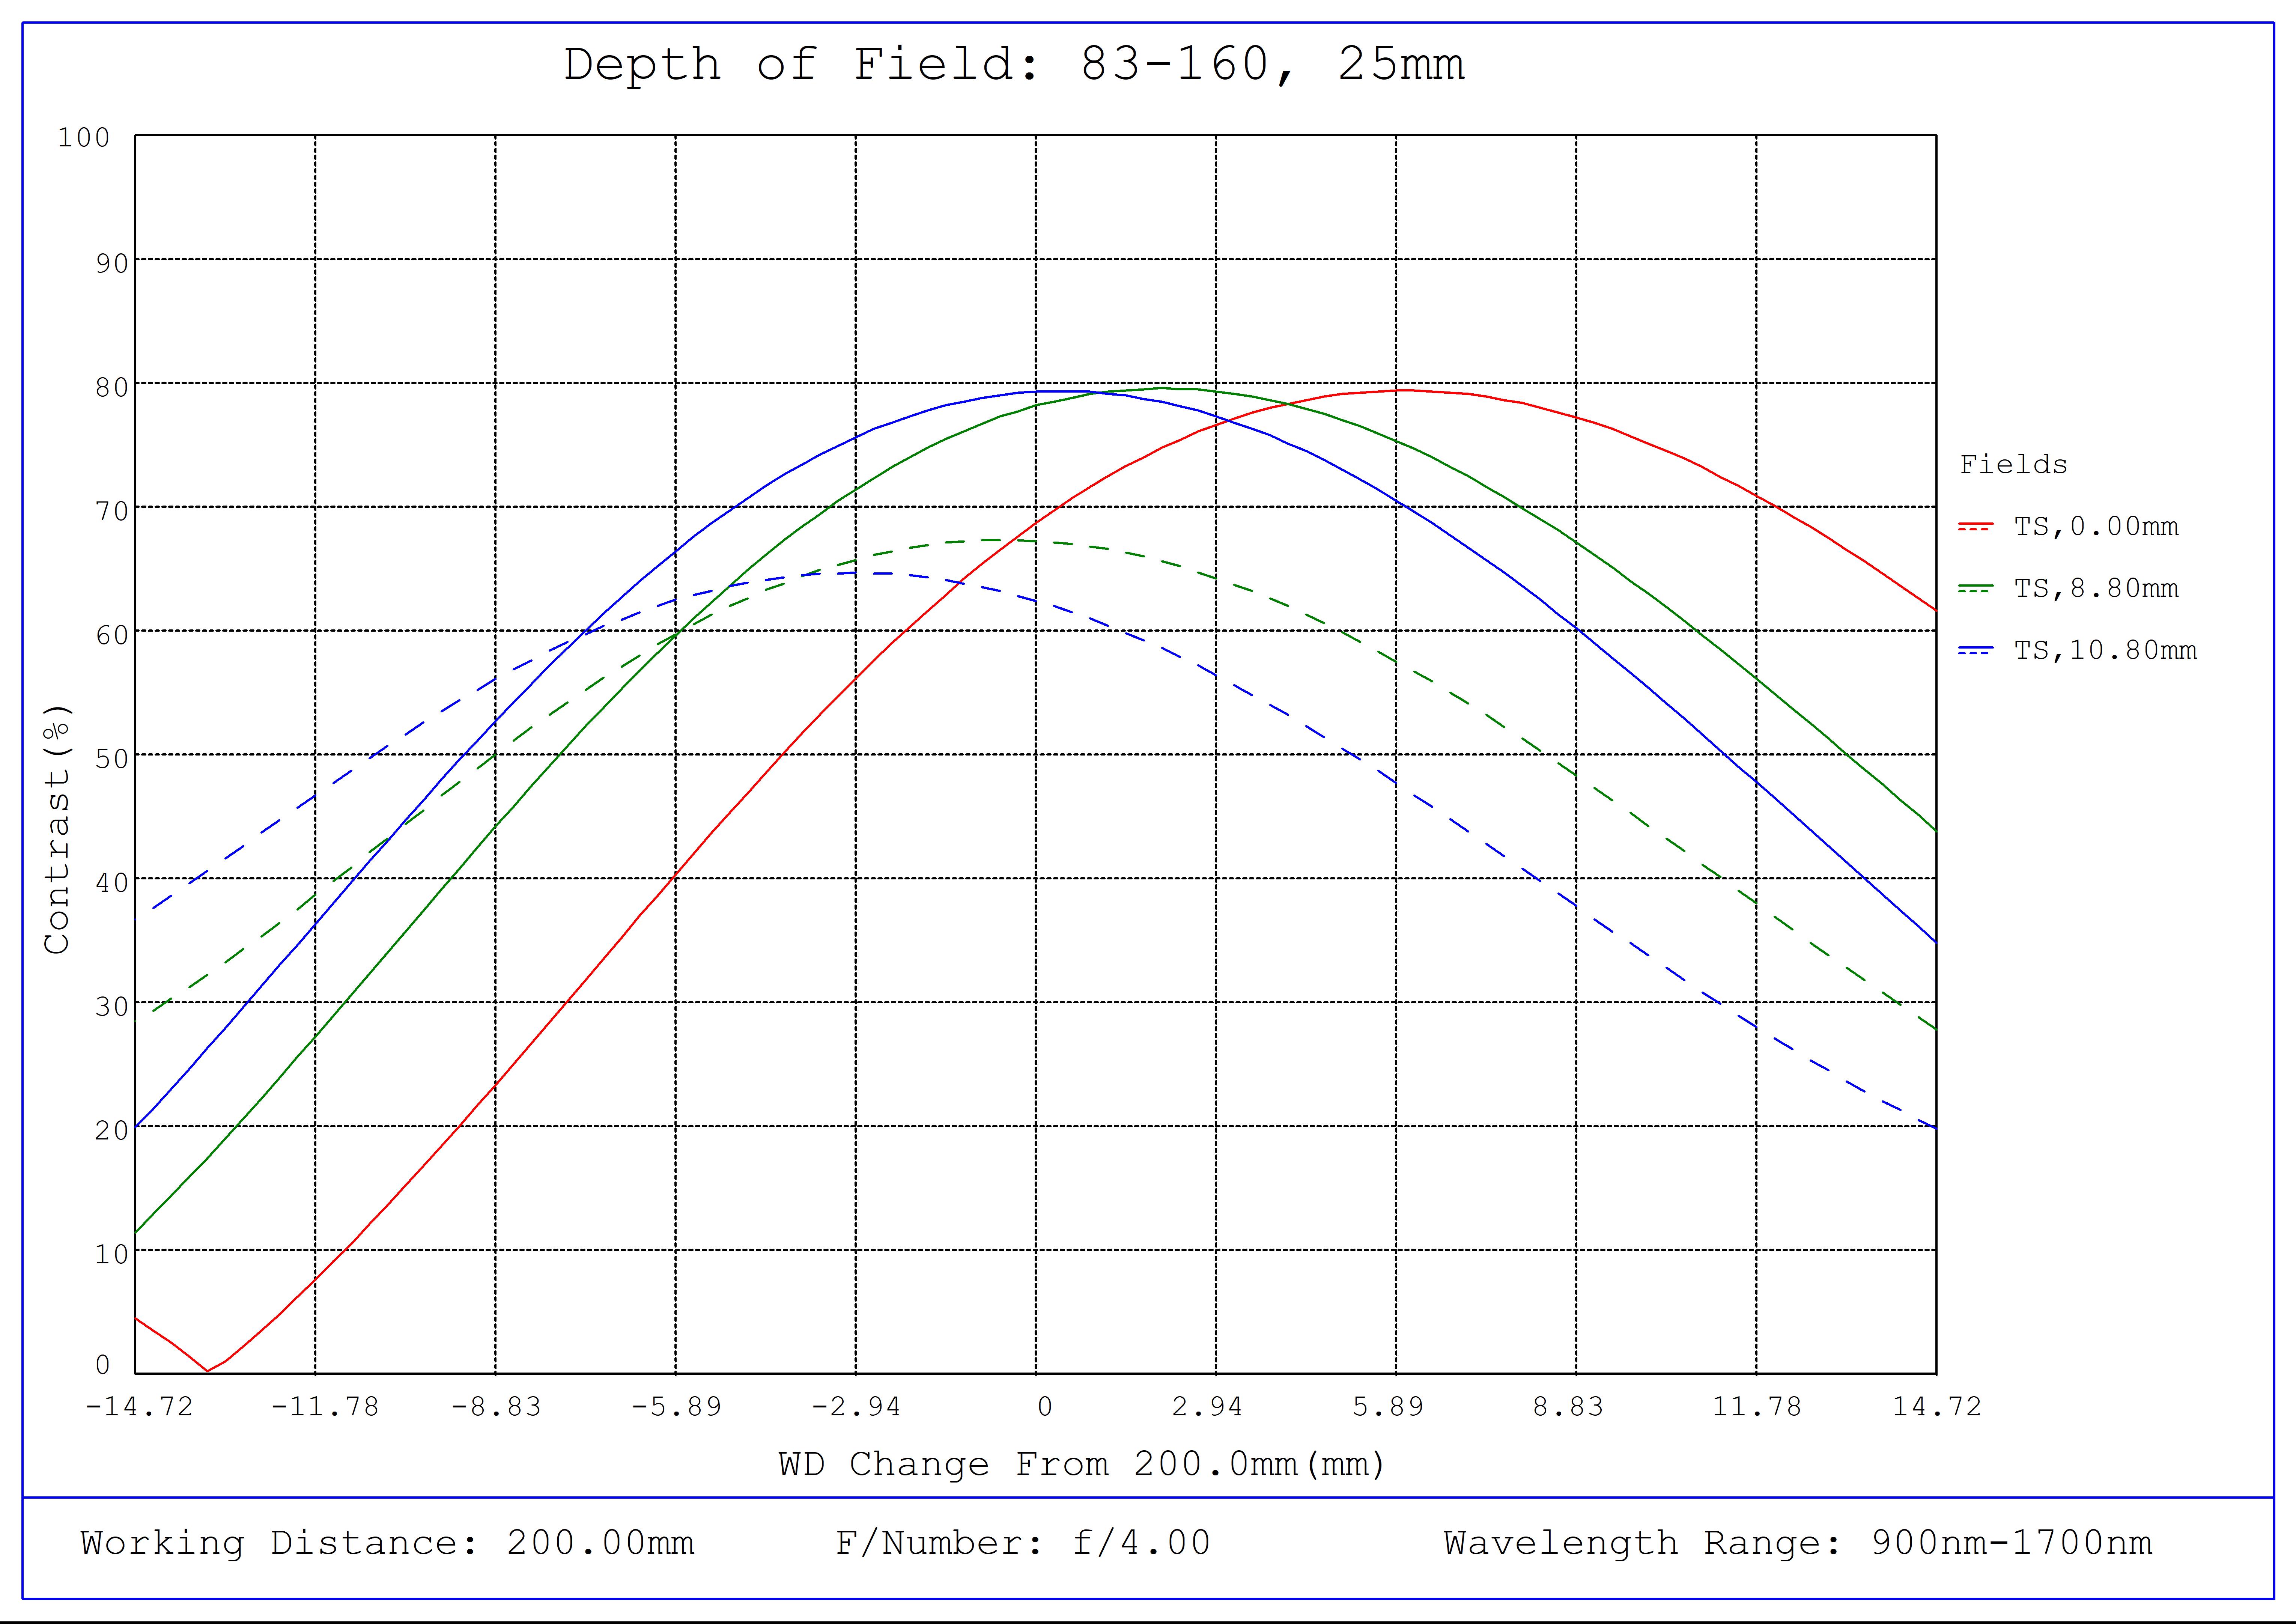 #83-160, 25mm SWIR Series Fixed Focal Length Lens, Depth of Field Plot, 200mm Working Distance, f4